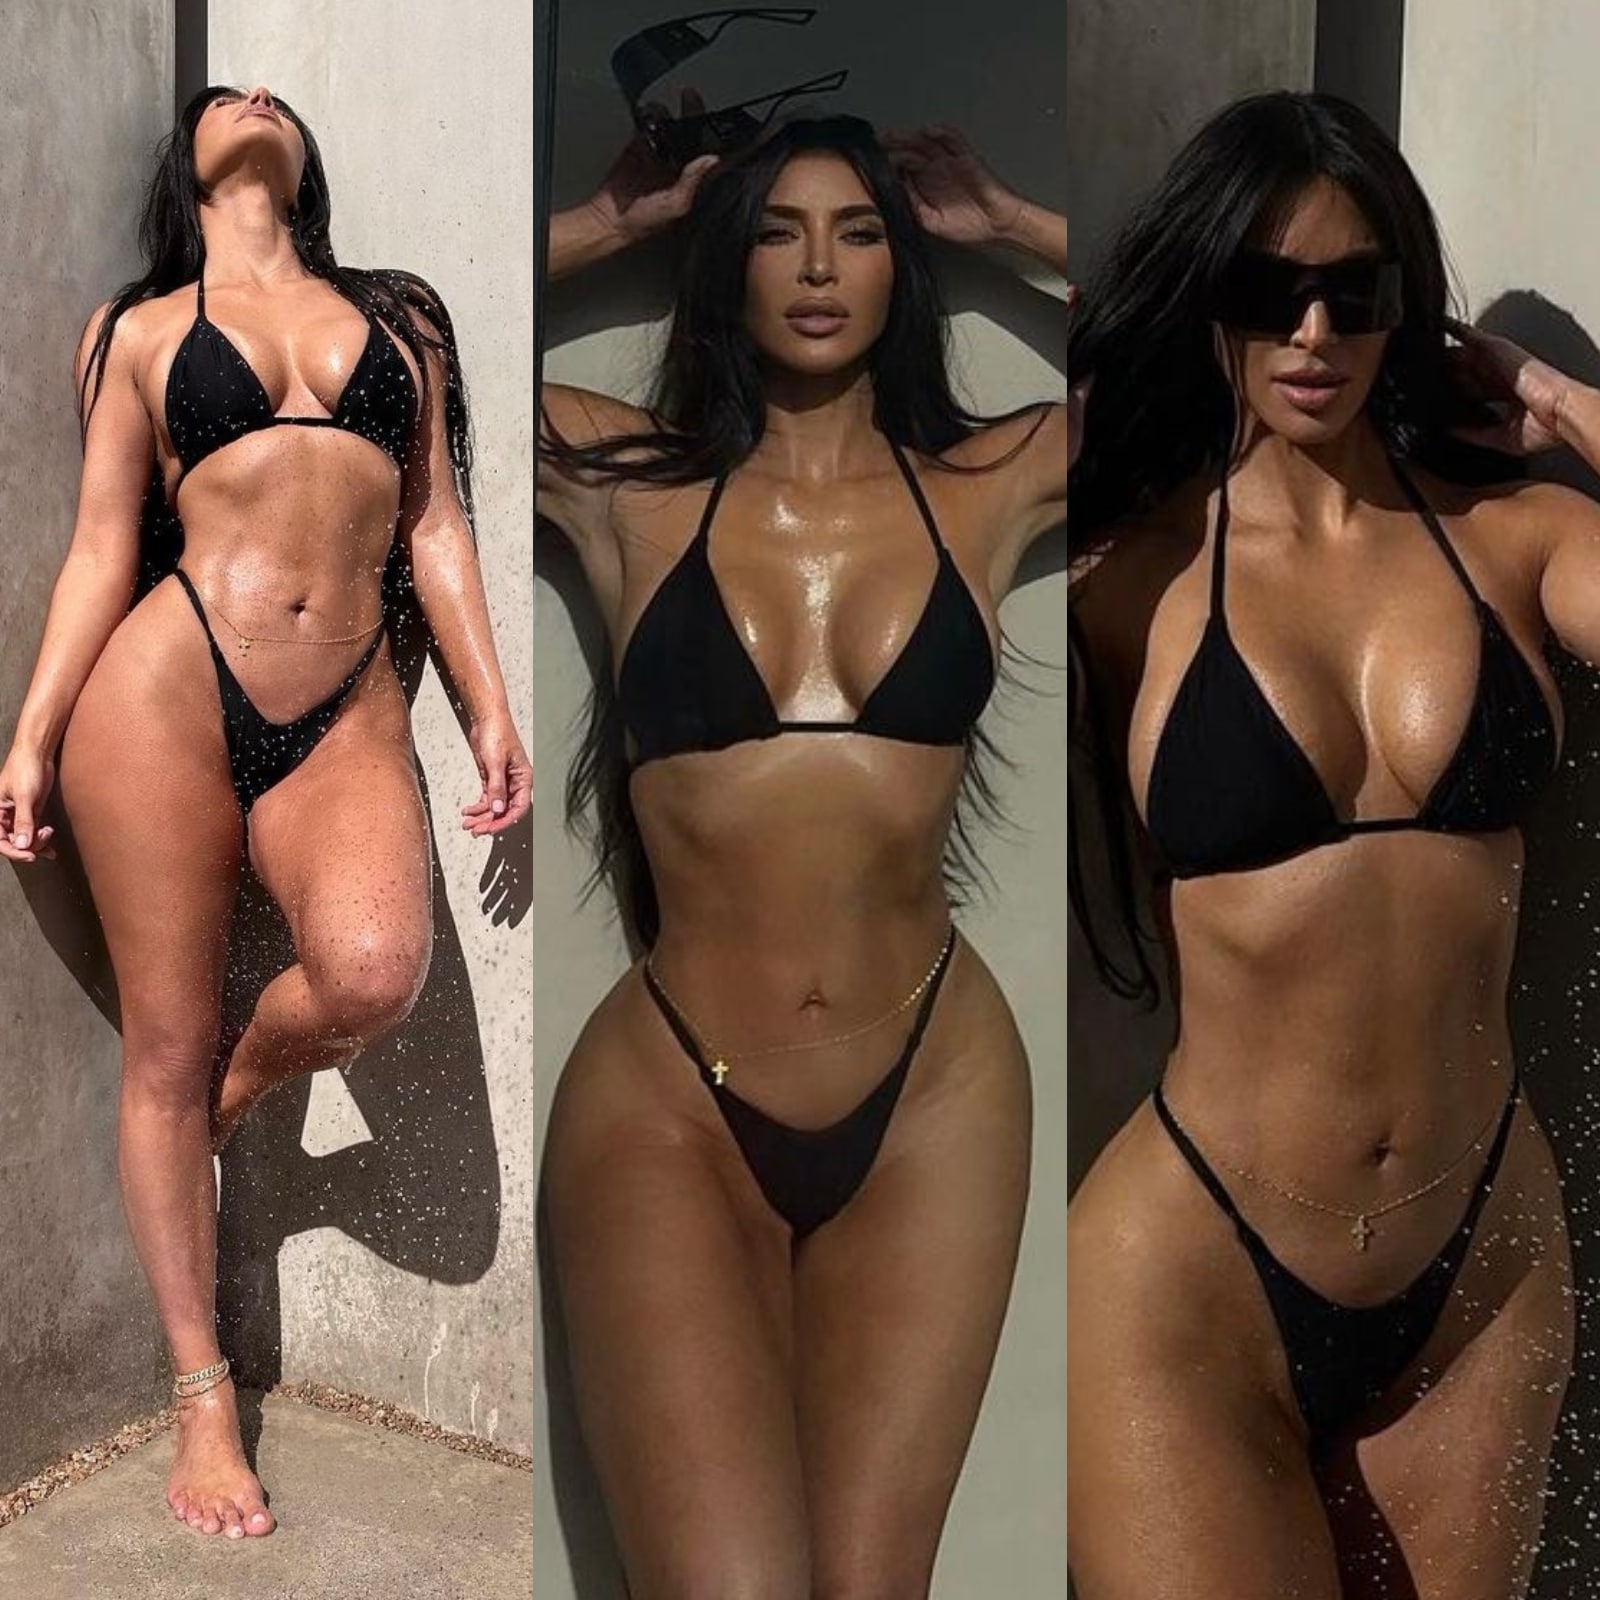 Kim Kardashian Xxnx - Kim Kardashian Models In Skimpy Black Bikini With Gold Cross-Belly Chain In  The Shower; See Hot Pics - News18